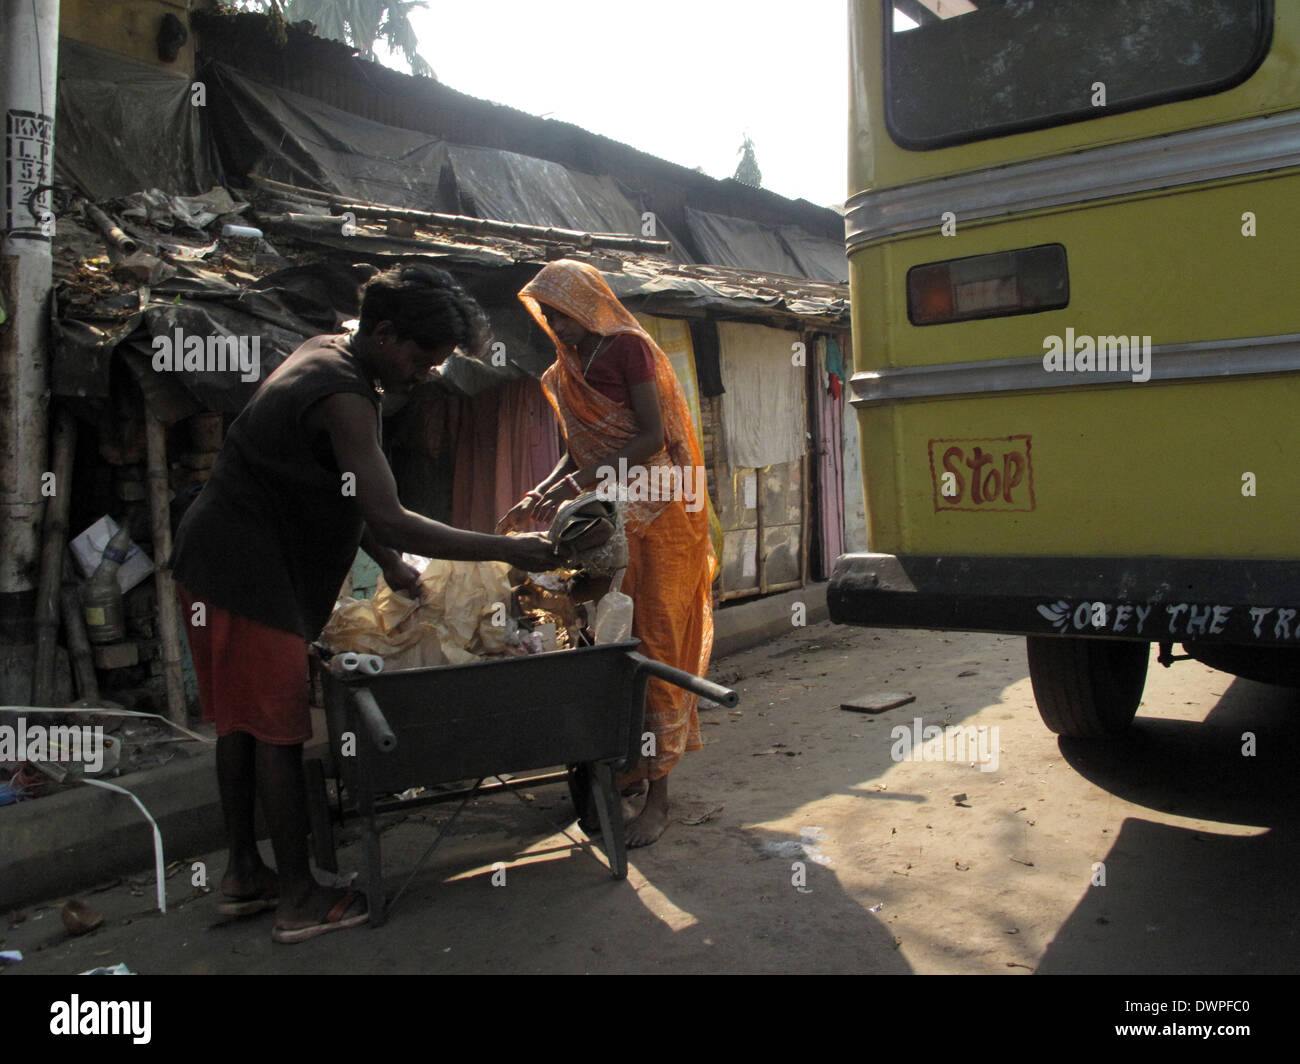 Las calles de Calcuta, el limpiador sobre la calle 30 de enero de 2009, en Calcuta, Bengala Occidental, India. Foto de stock